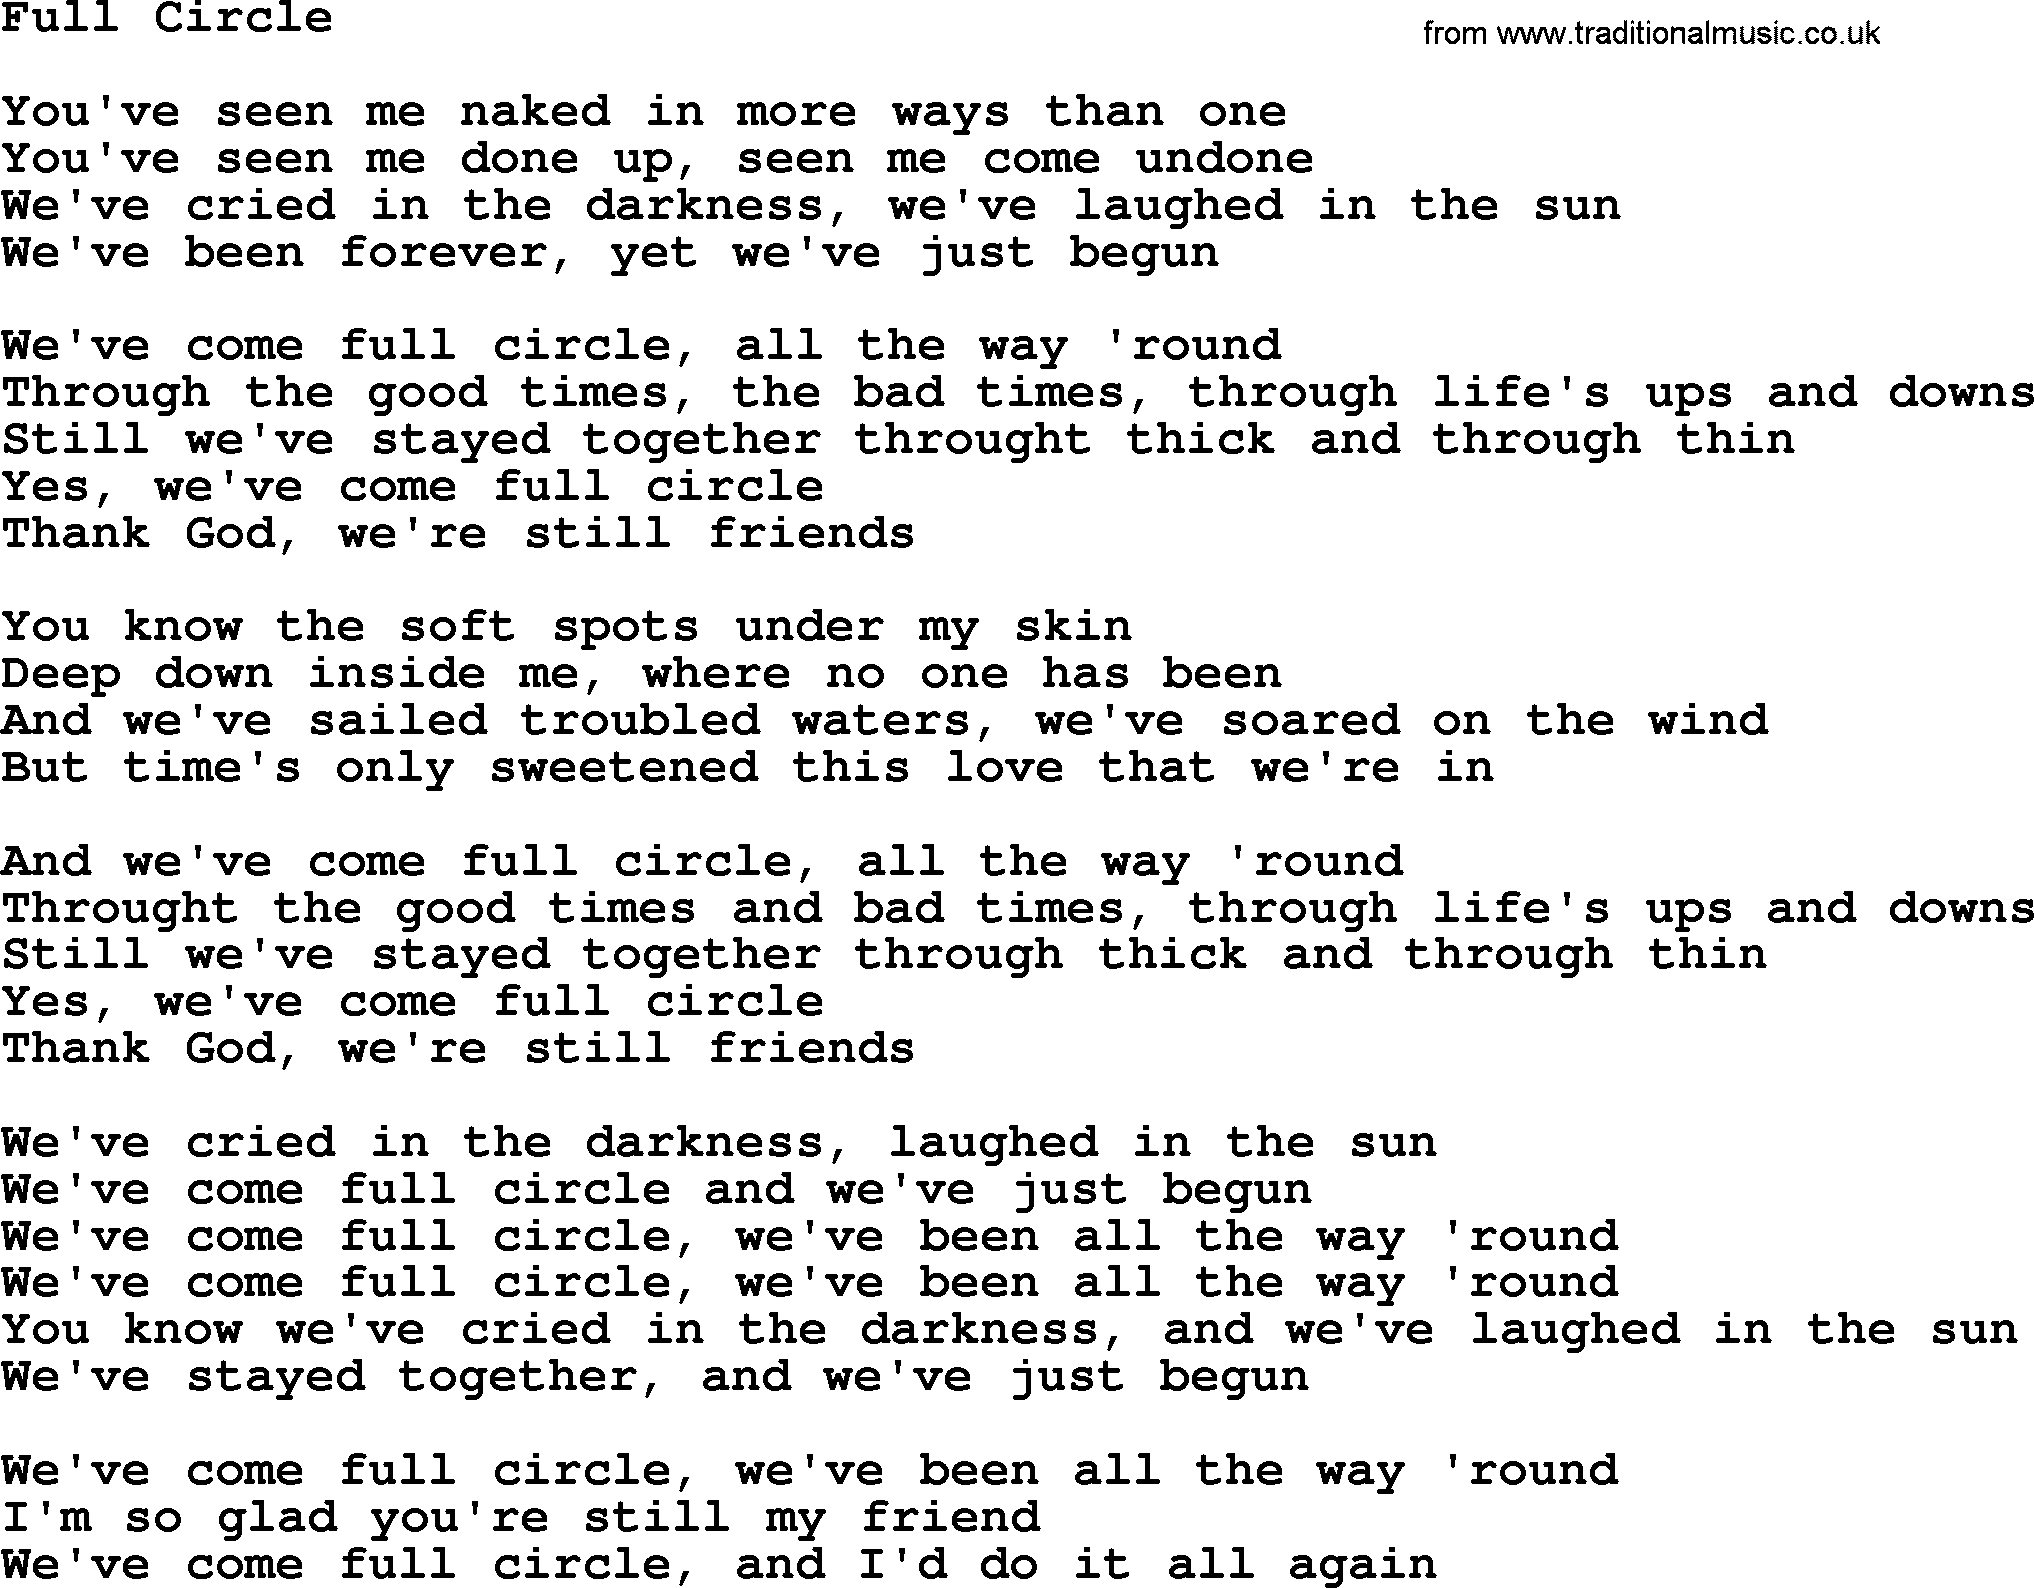 Dolly Parton song Full Circle.txt lyrics